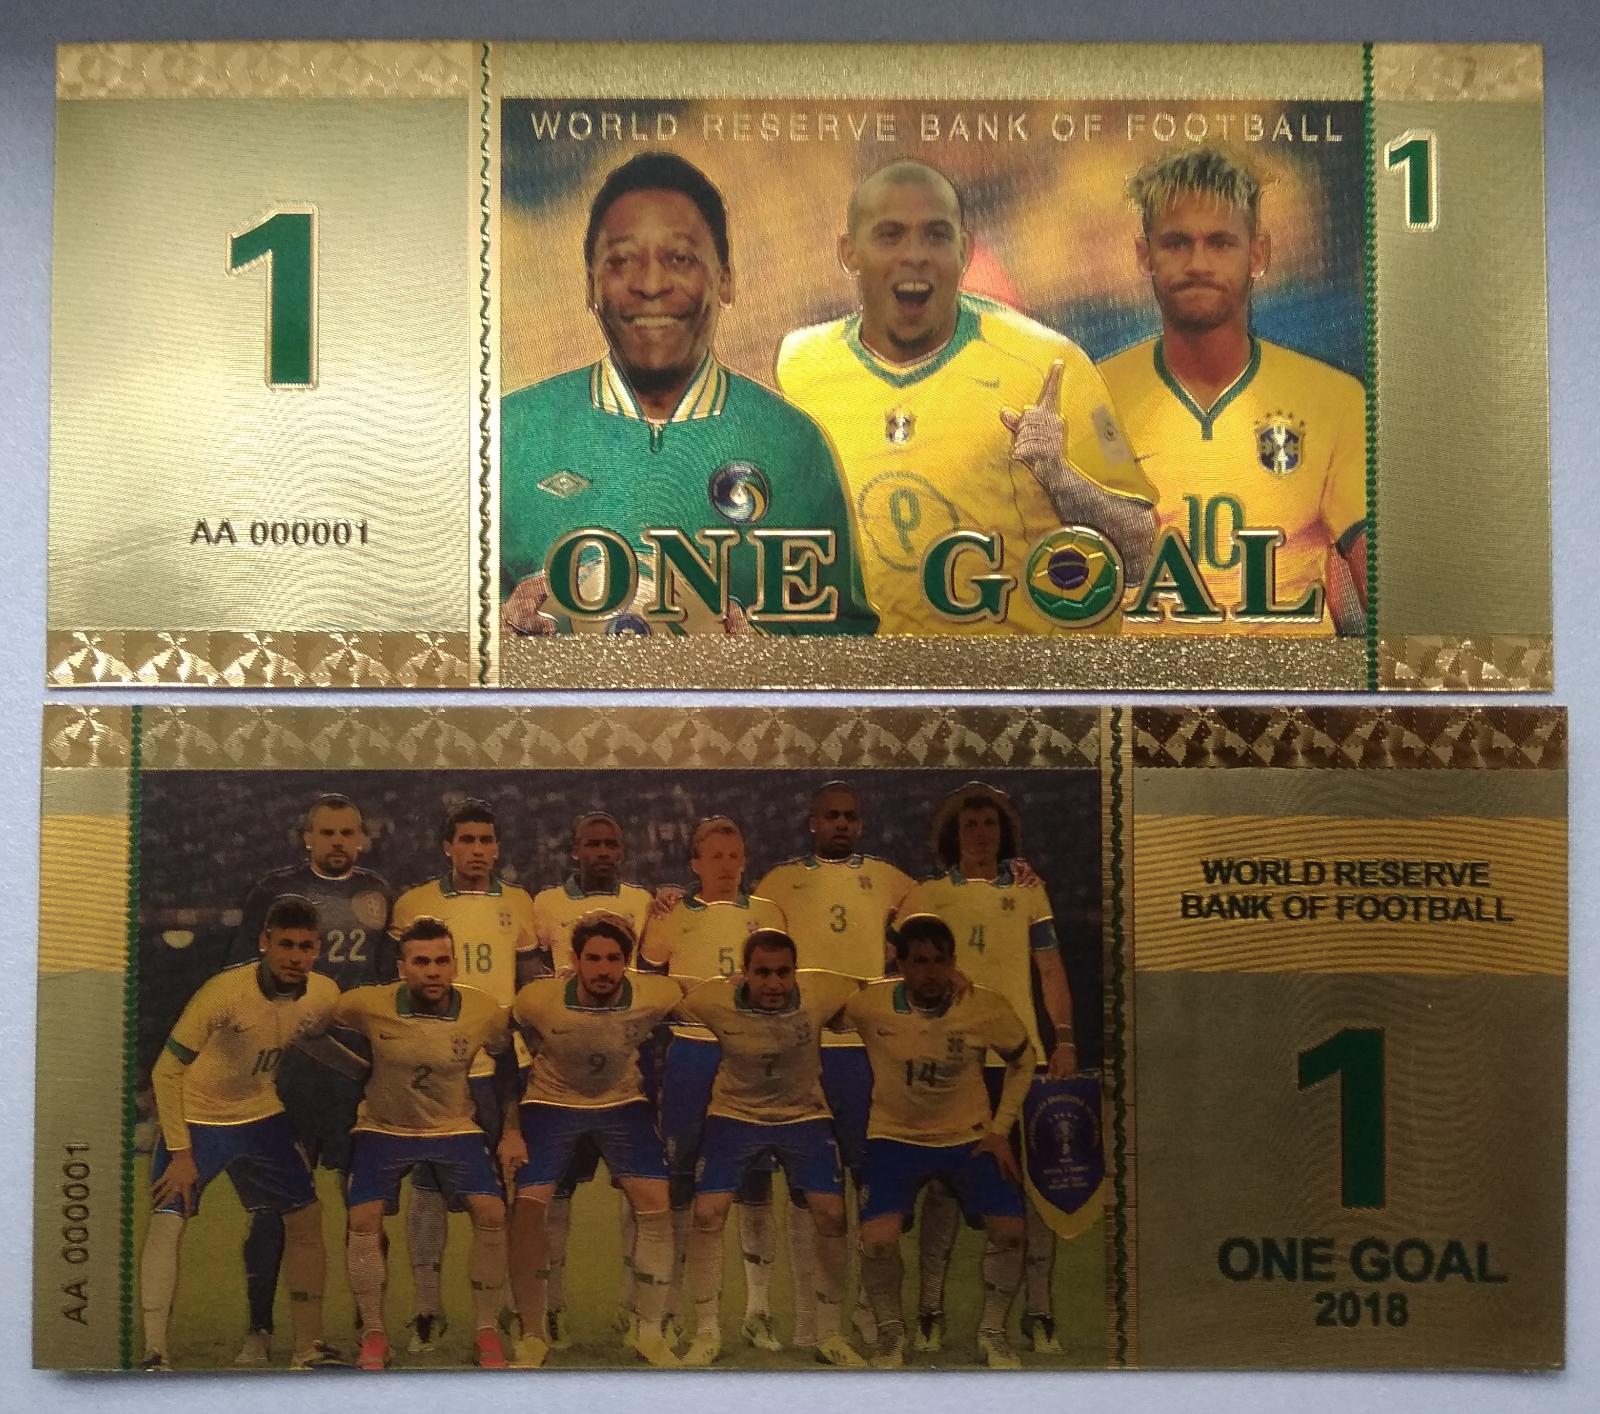 1 zlatý gól - Brazília (Pelé, Neymar, Ronaldo) - Zberateľstvo